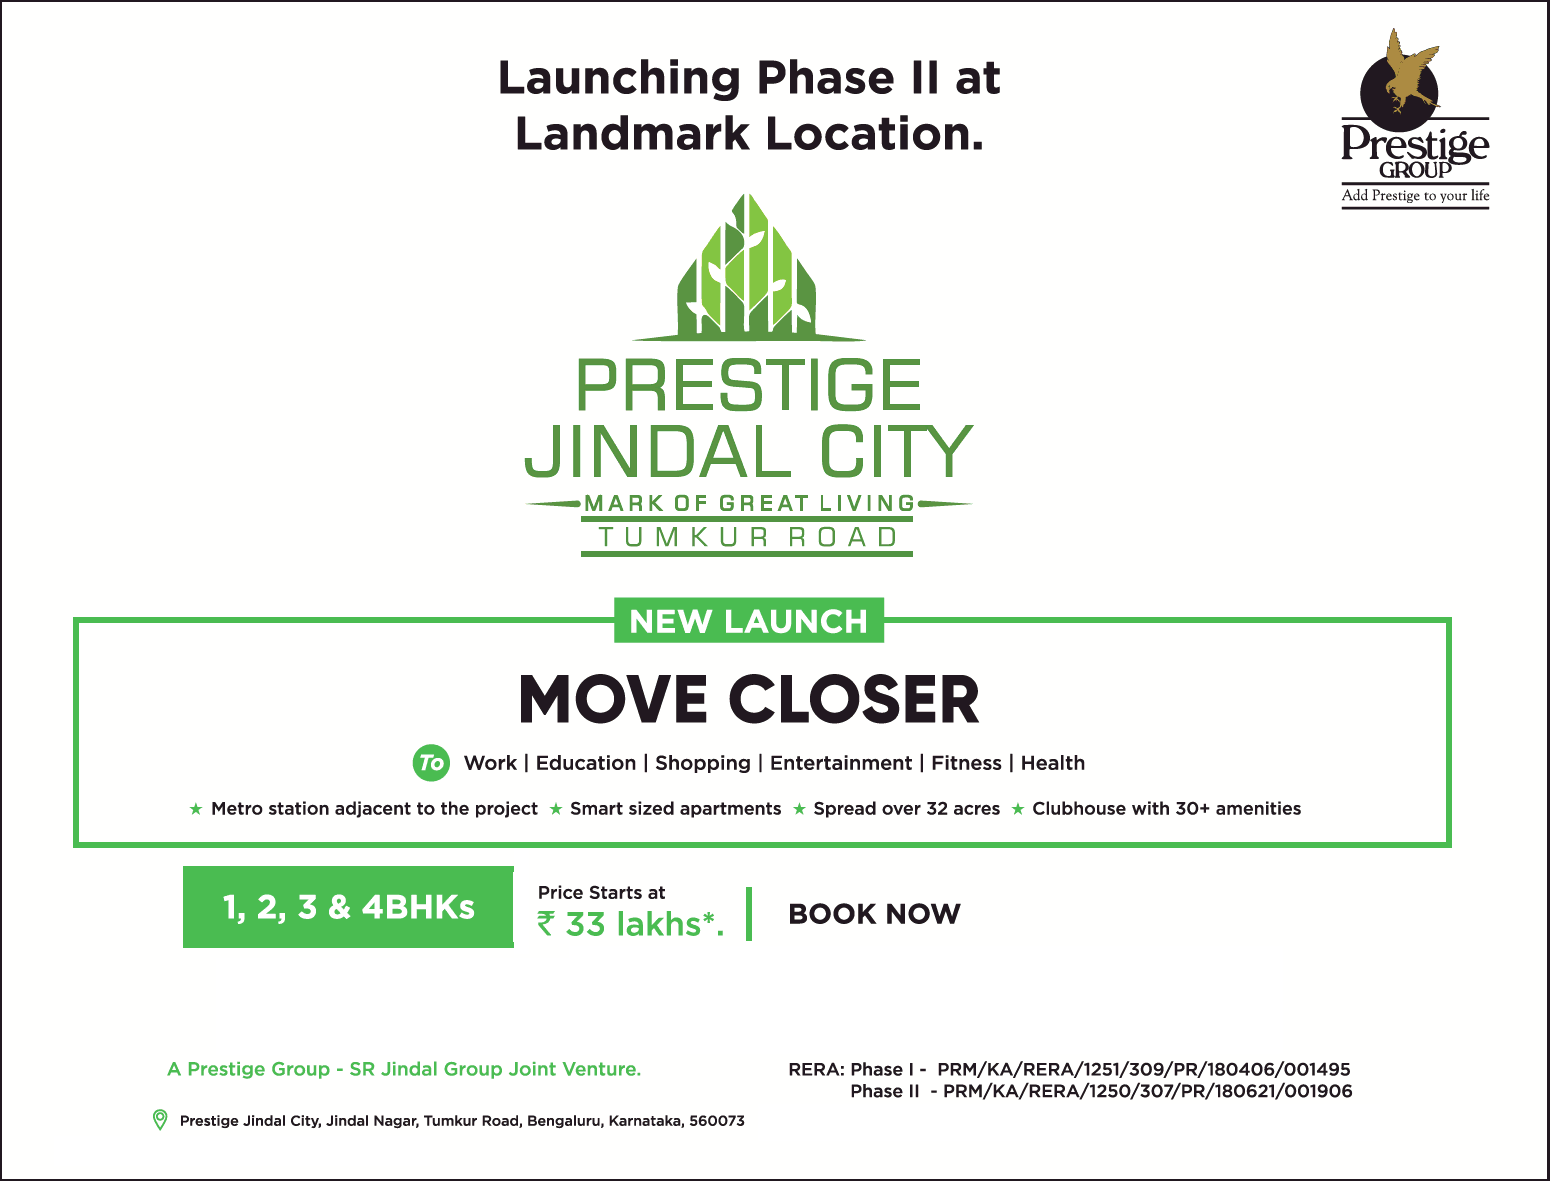 Launching Phase 2 at landmark location at Prestige Jindal City in Bangalore